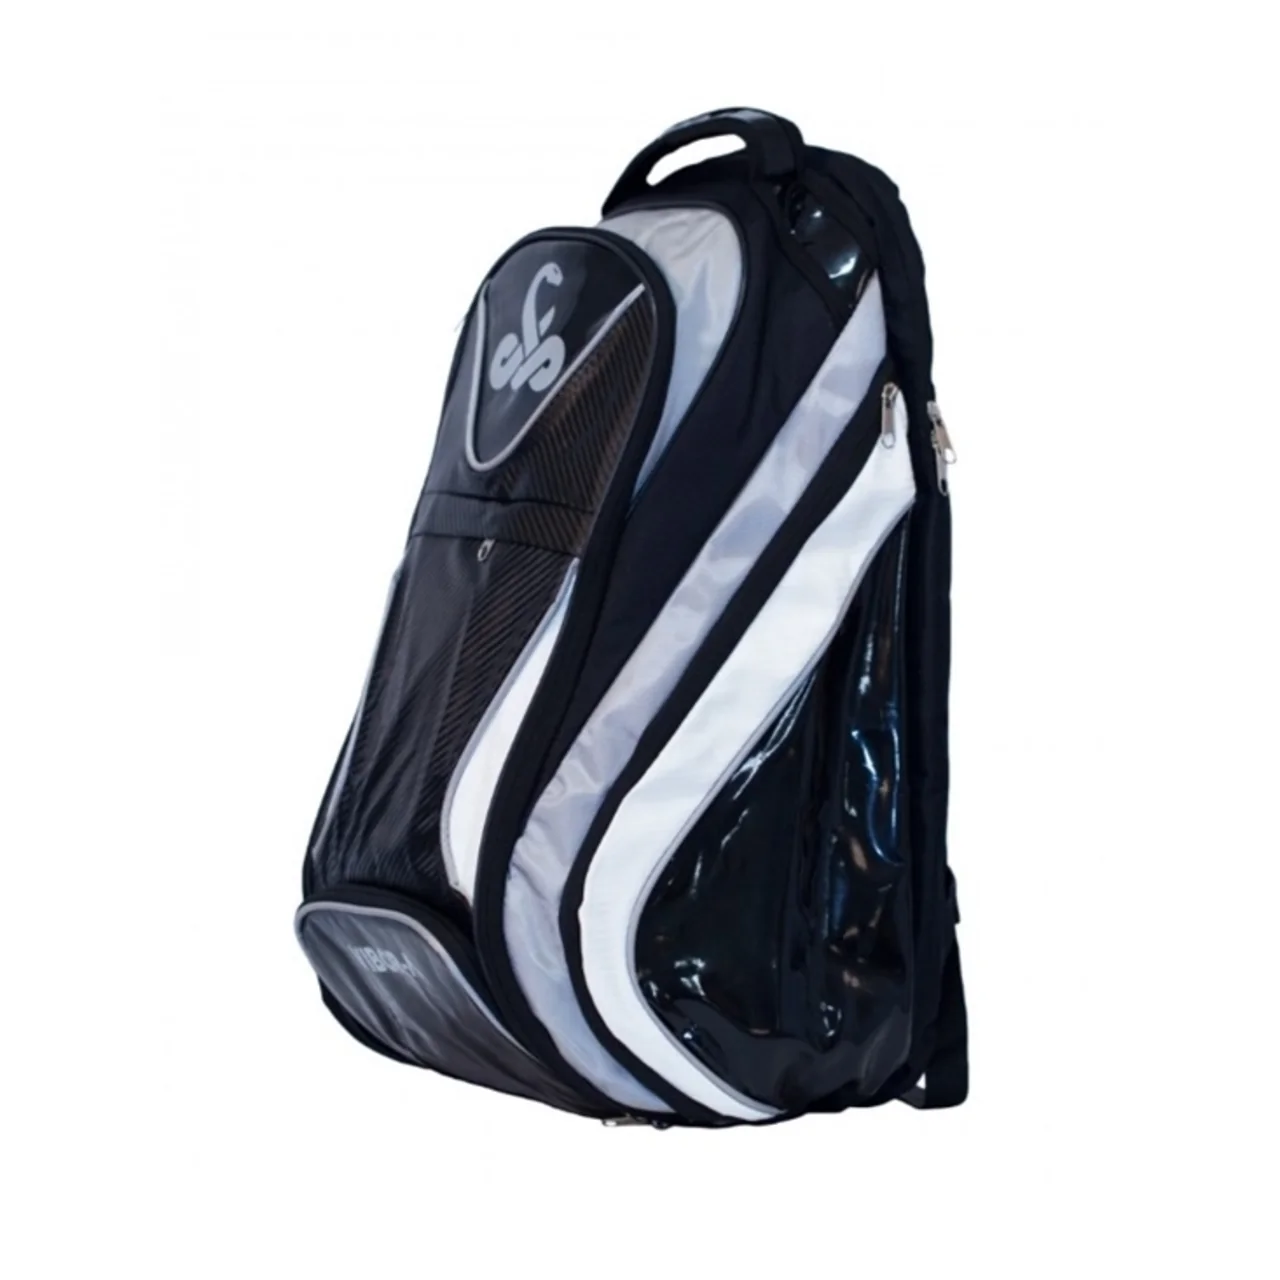 Vibor-A Backpack Black/Silver